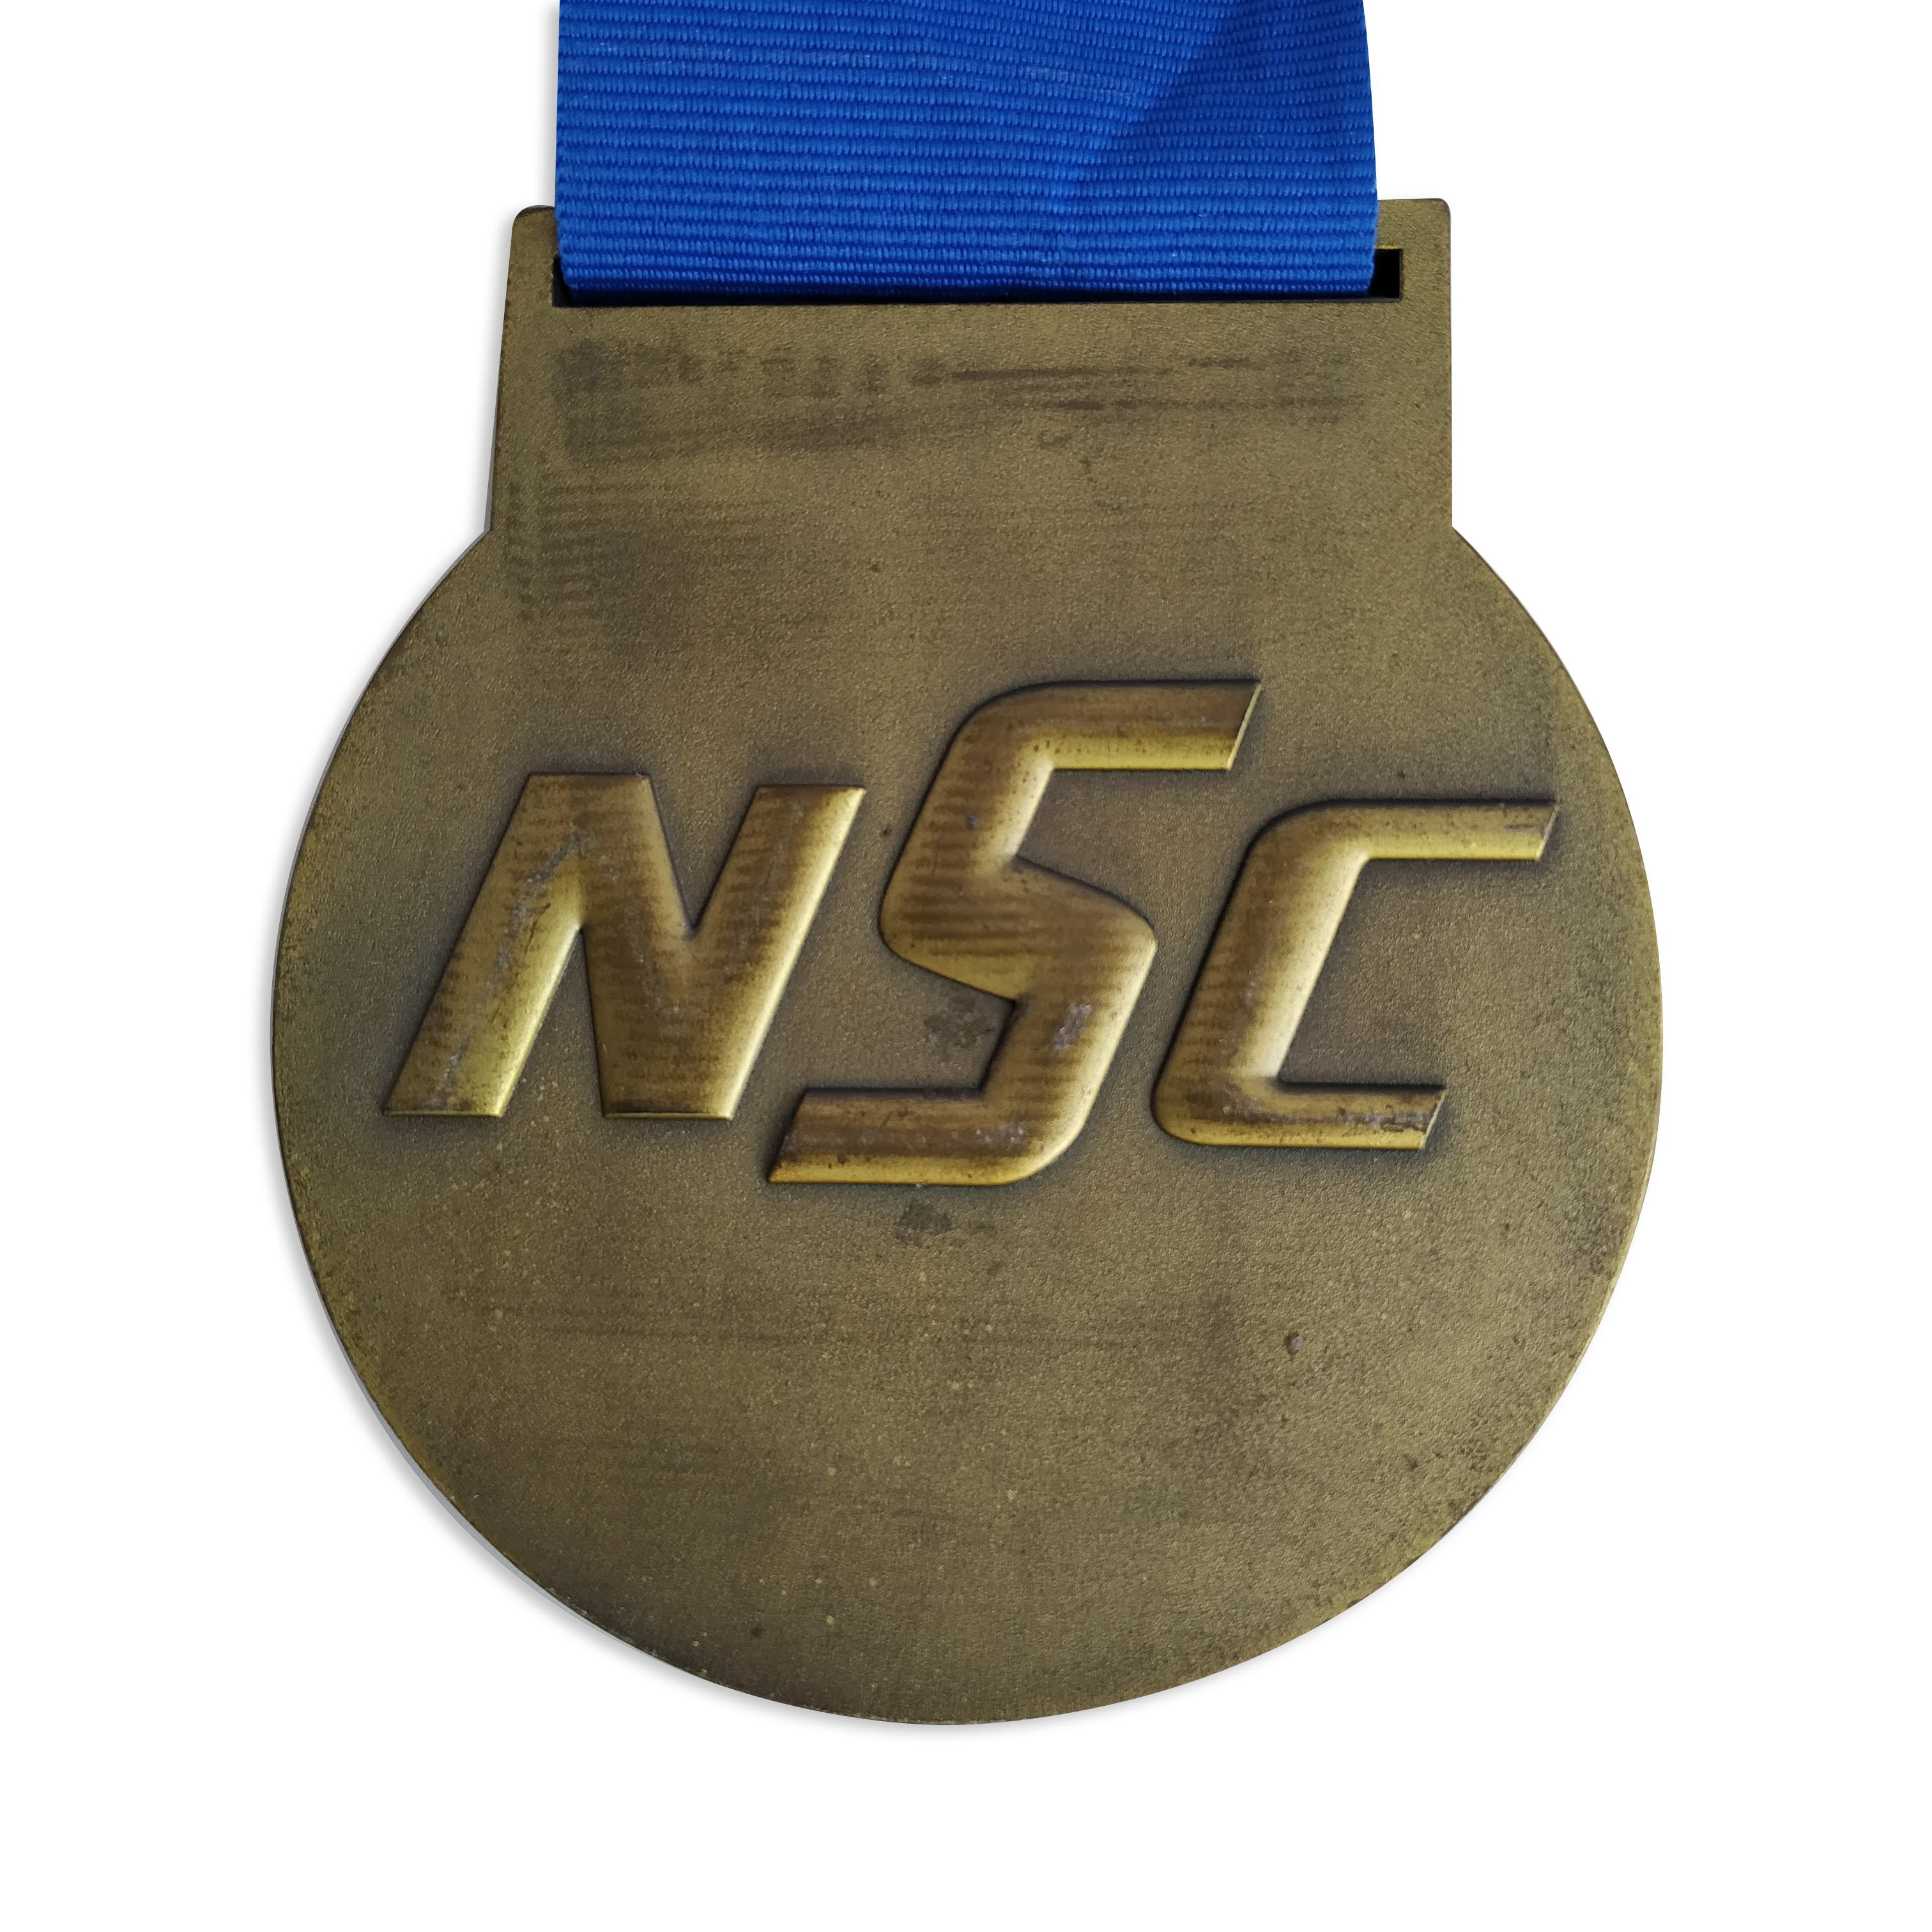 2014 USA Tacoma Speed Skating Sports Game Invitational Medal 3D Medallion